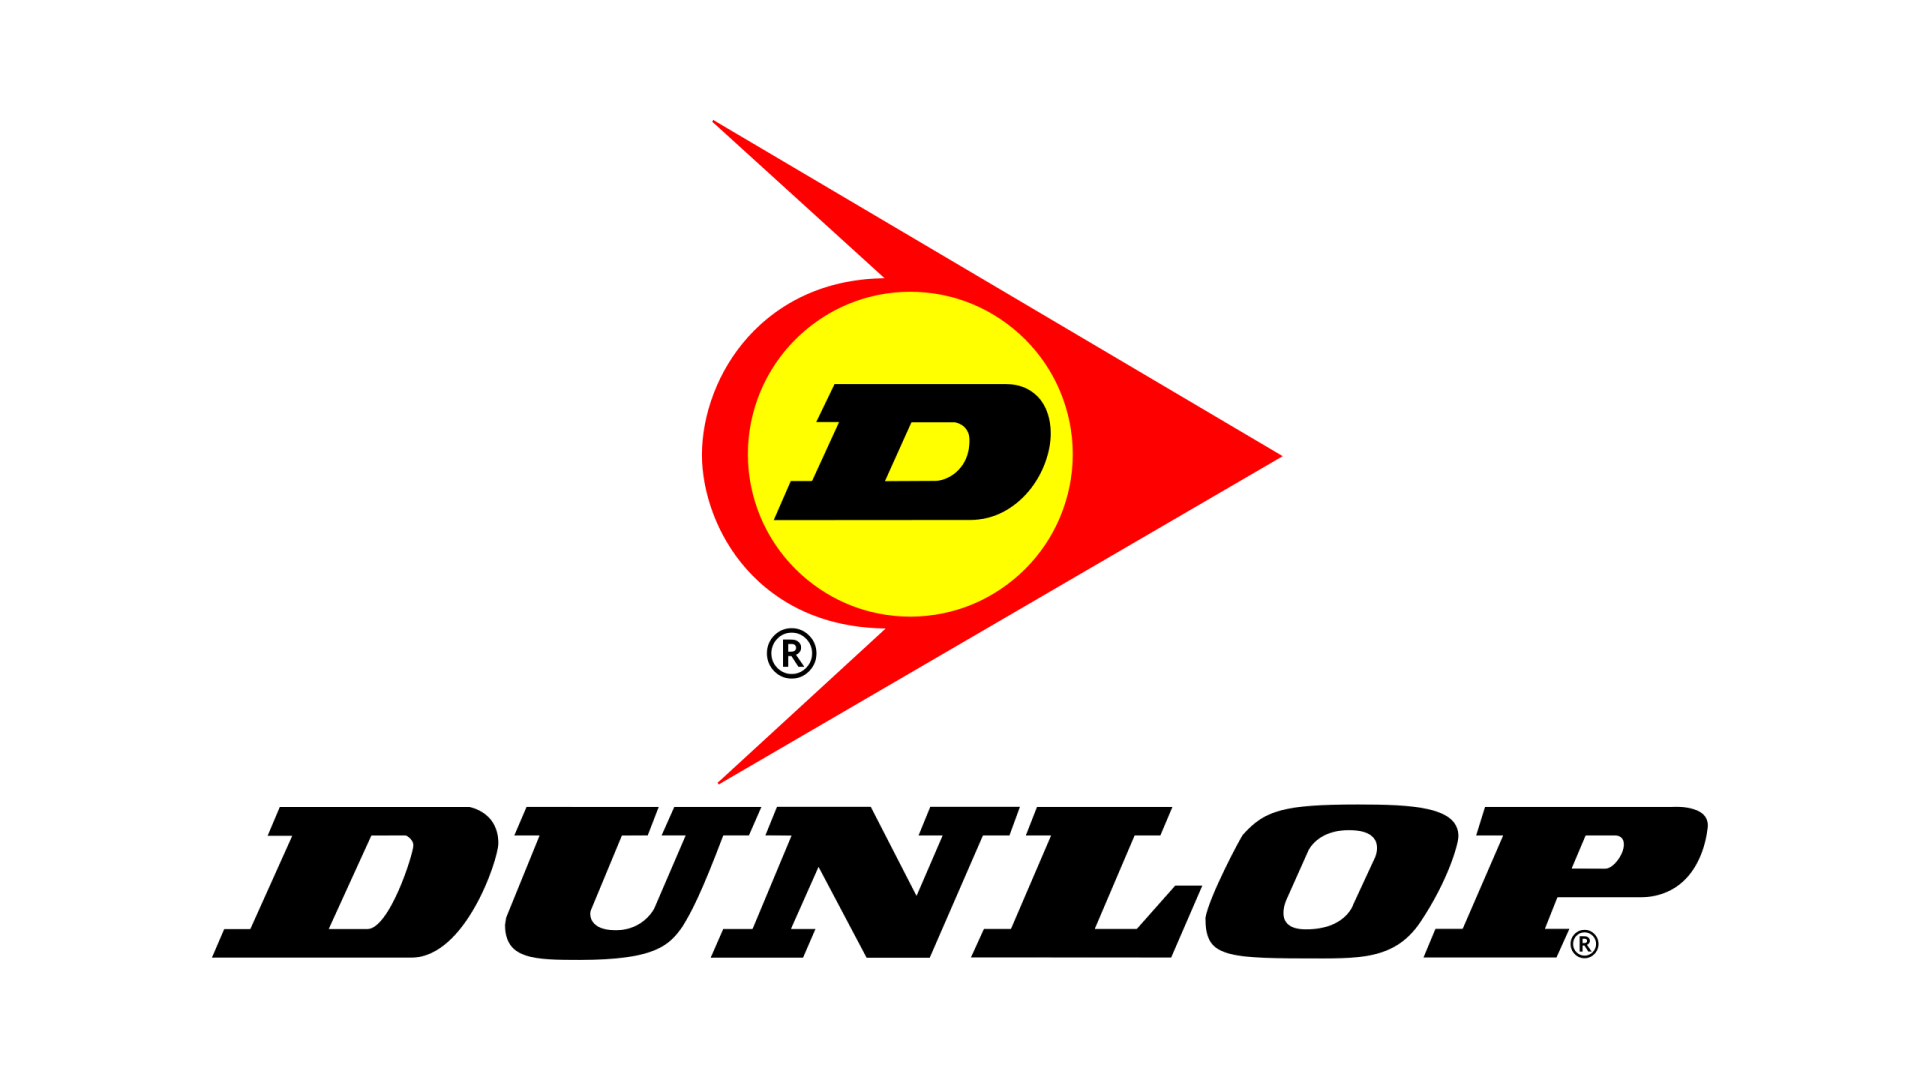 Dunlop-logo-2560x1440